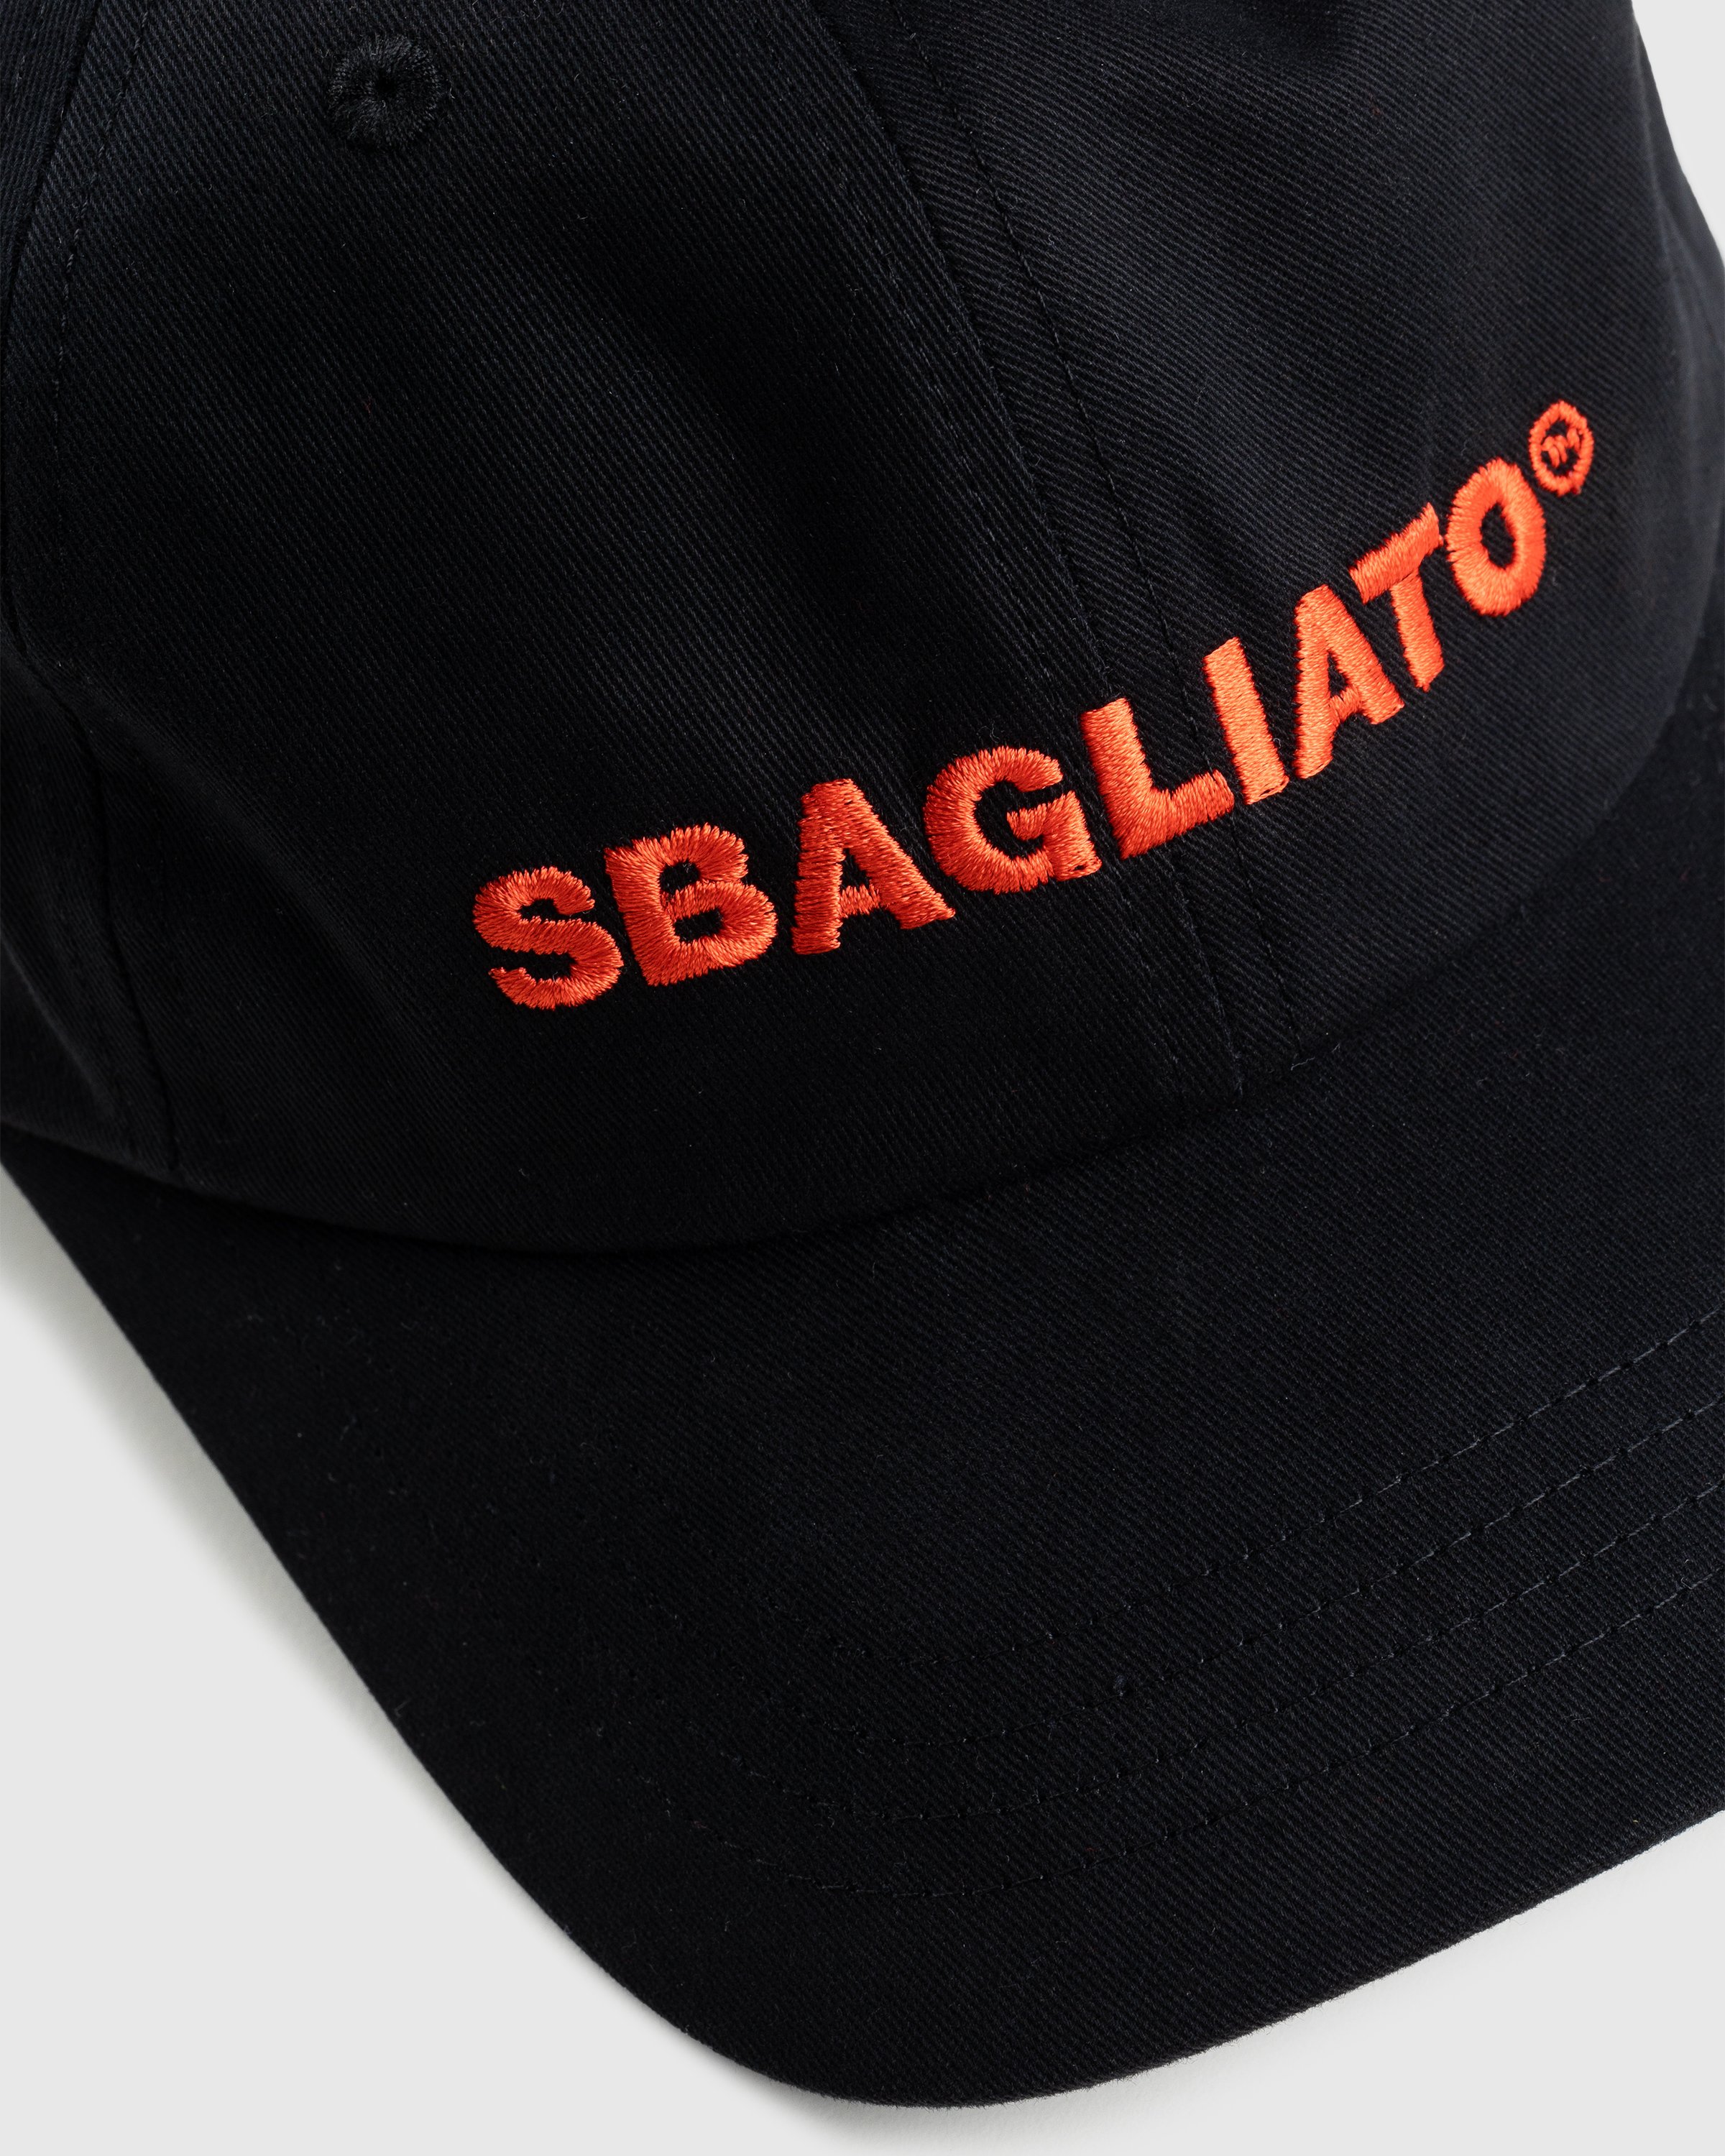 Bar Basso x Highsnobiety - Sbagliato Cap Black - Accessories - Black - Image 5